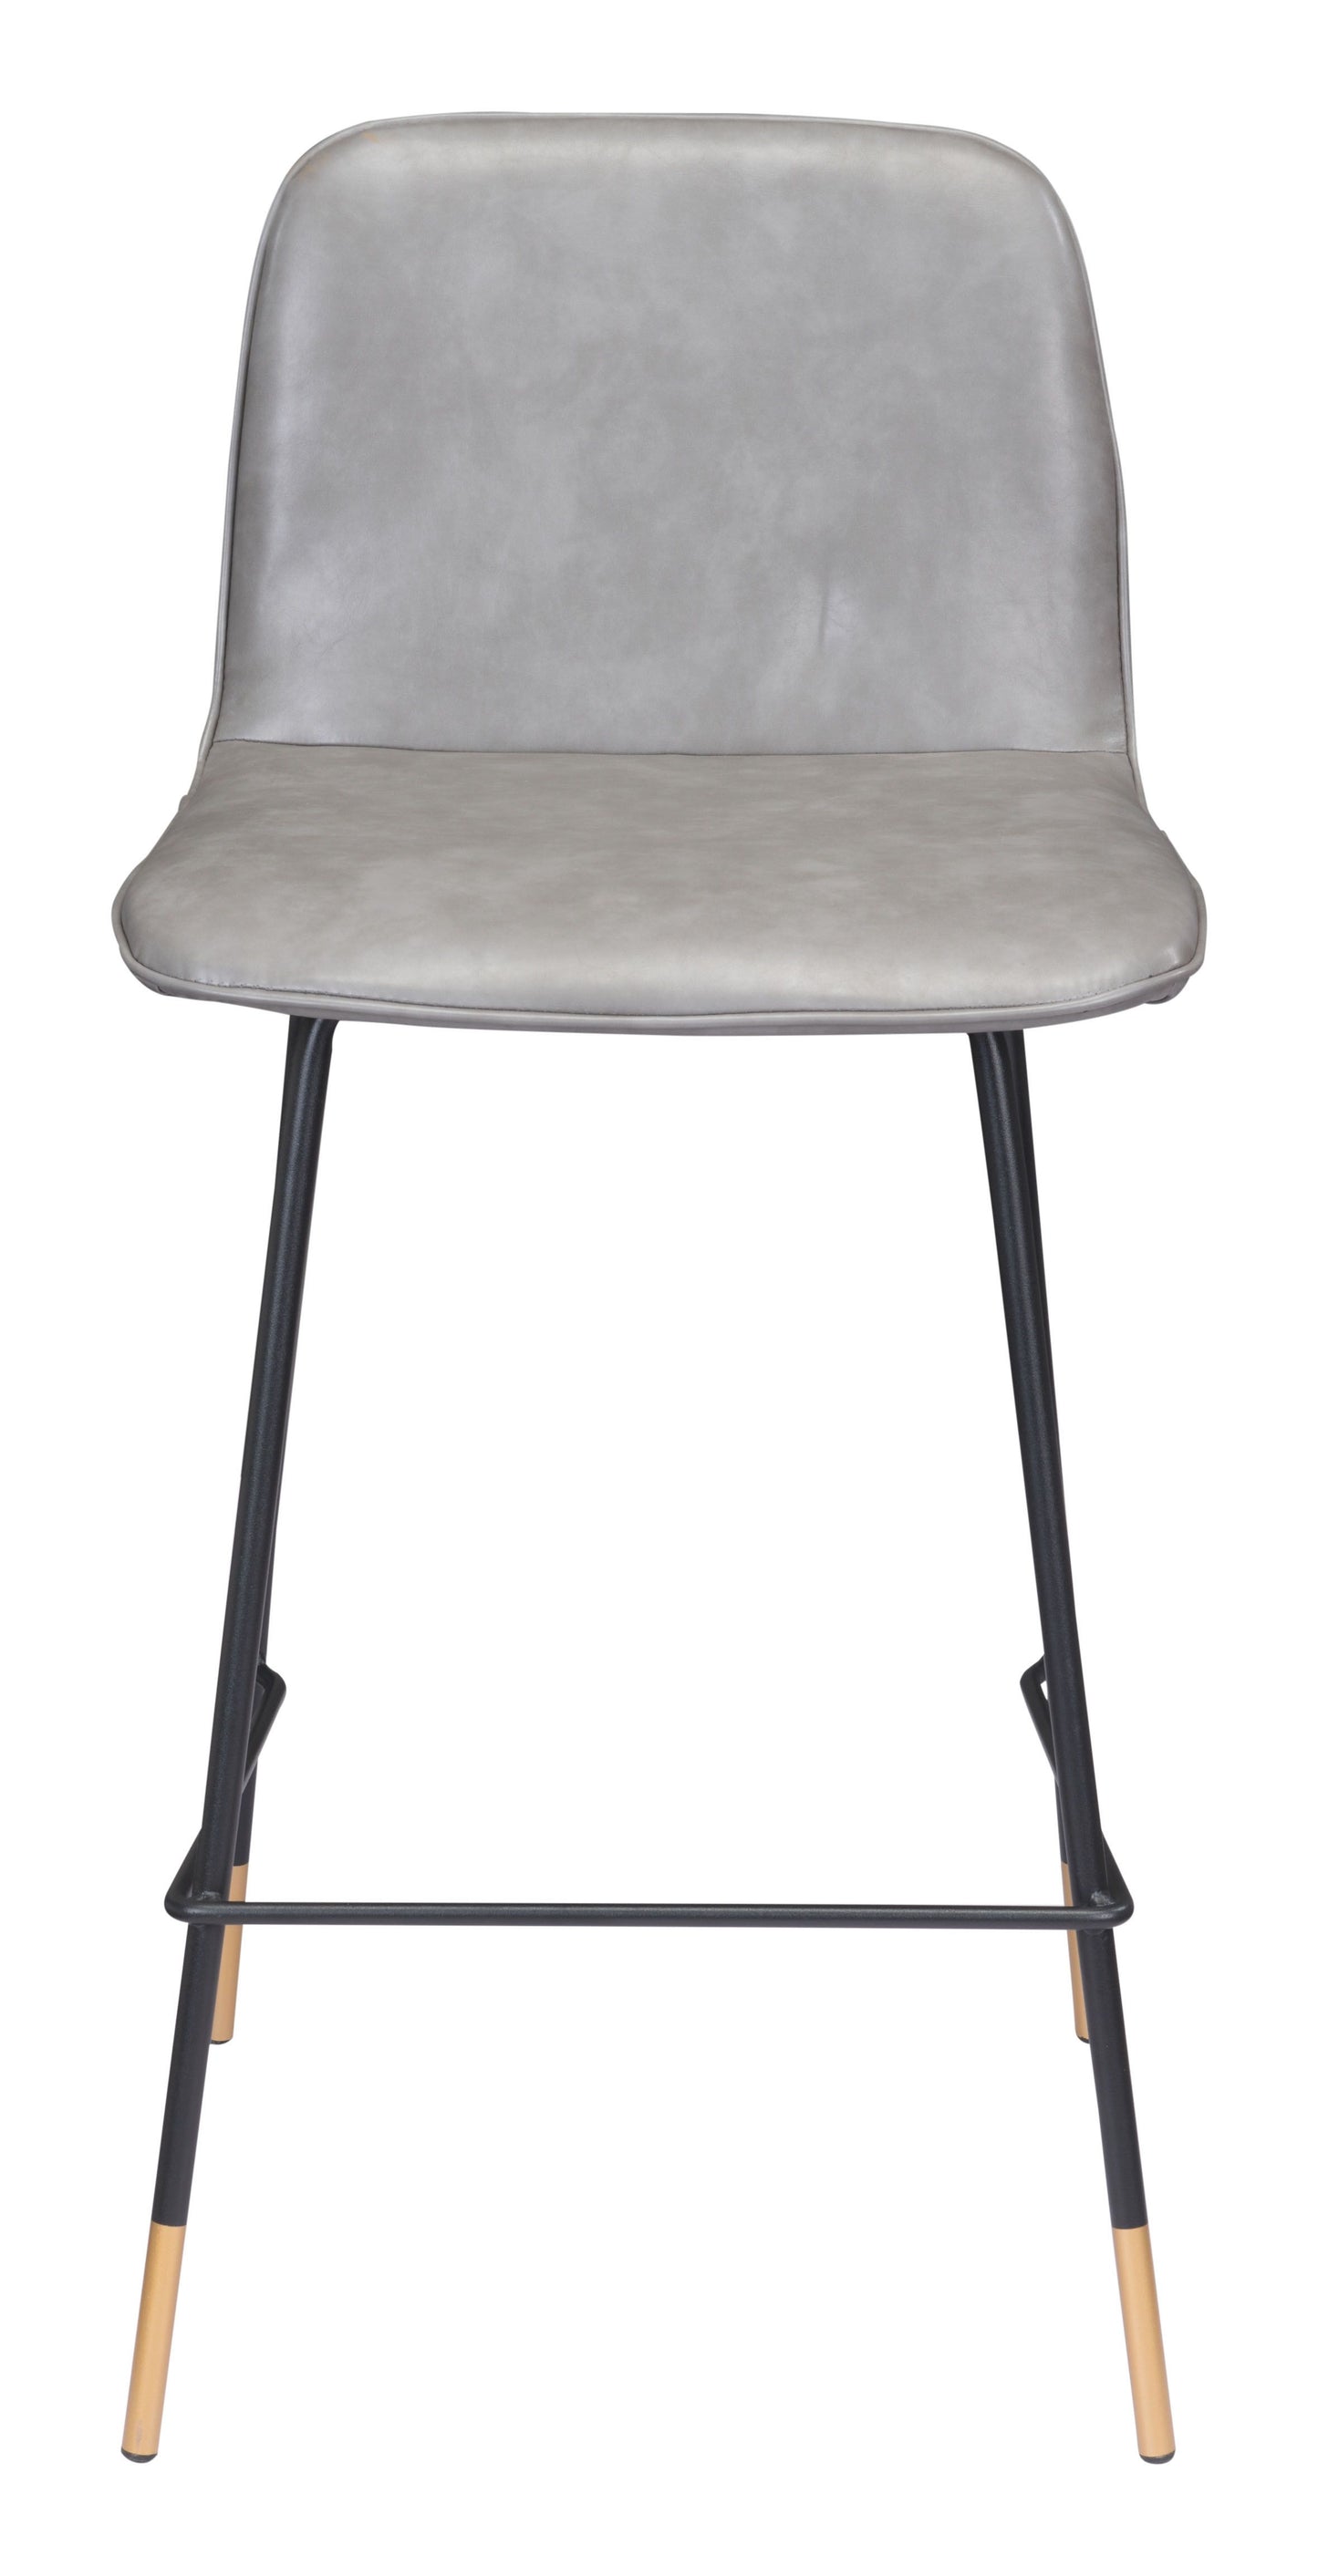 Var Counter Chair Gray